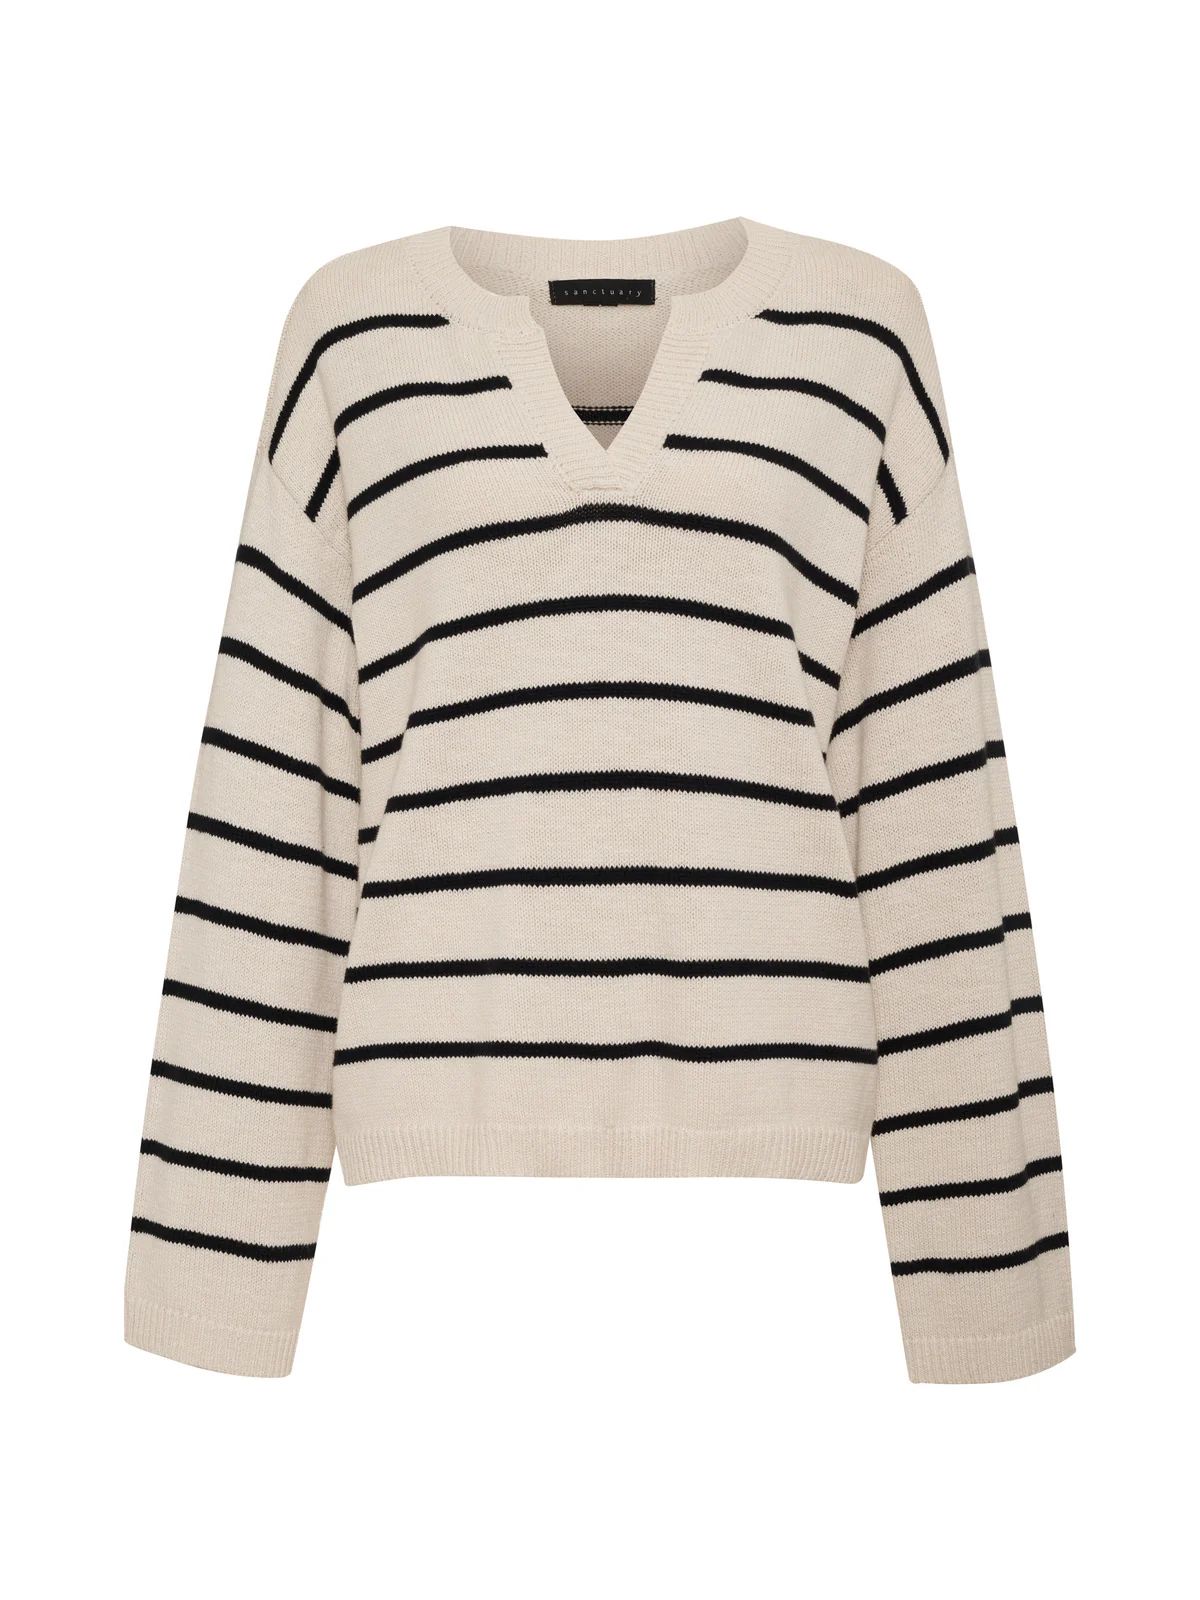 Chill Vibes Sweater Chalk Black Stripe | Sanctuary Clothing